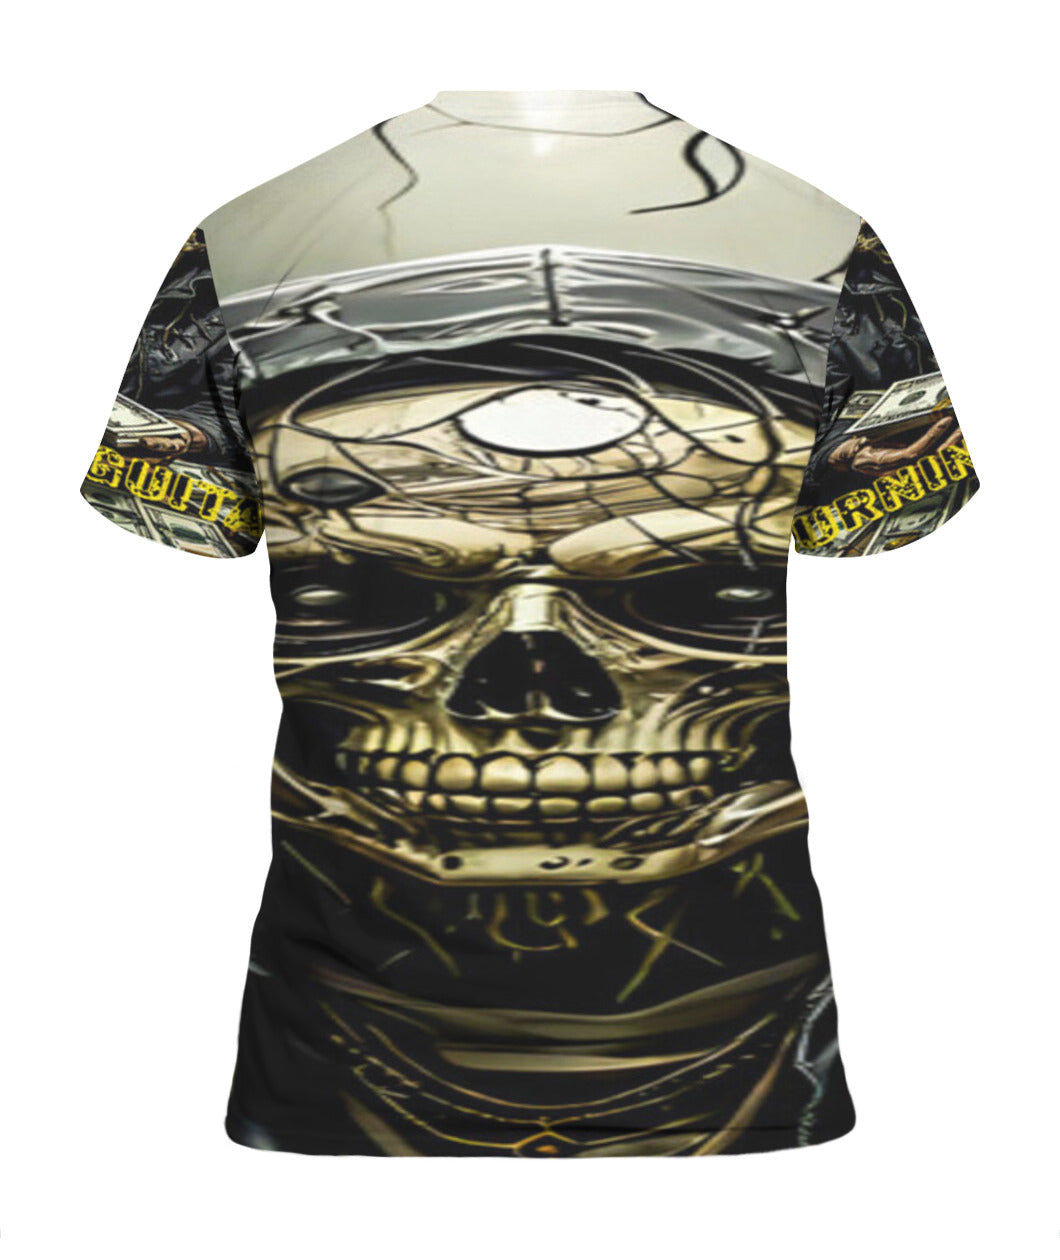 Skull Money Unisex T-Shirt by Burning Guitars